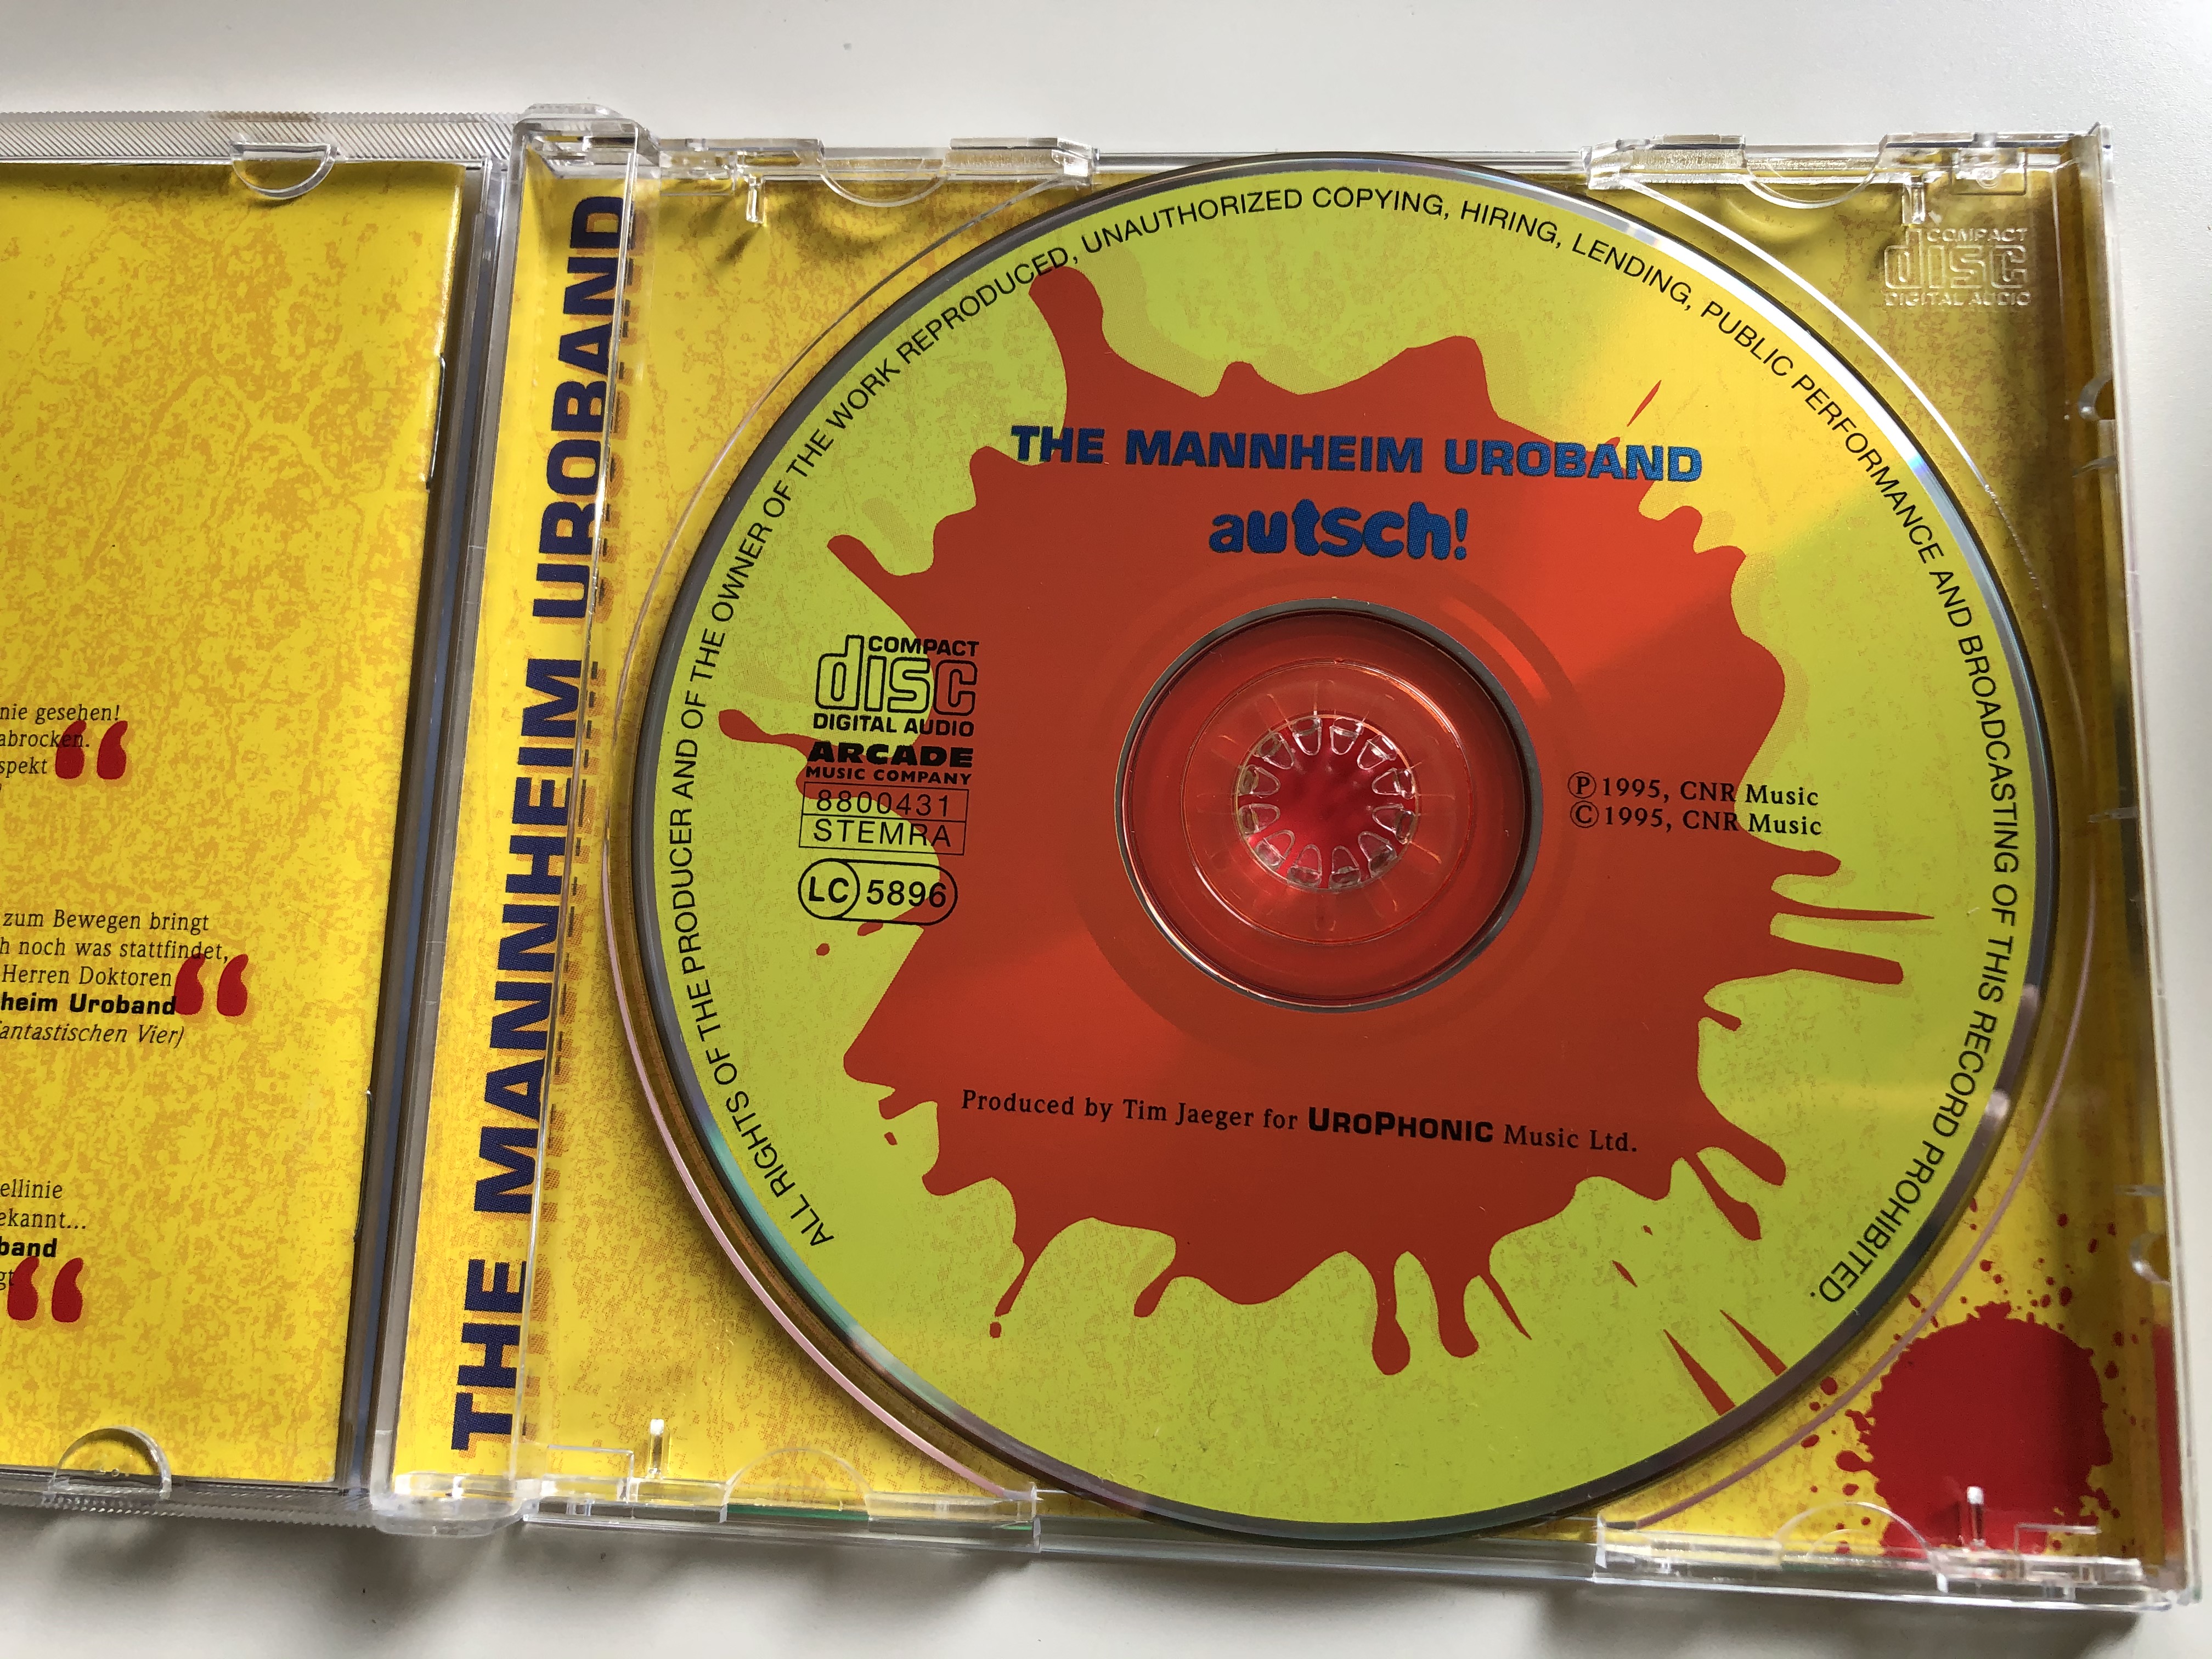 the-mannheim-uroband-autsch-cnr-music-audio-cd-1995-8800431-10-.jpg